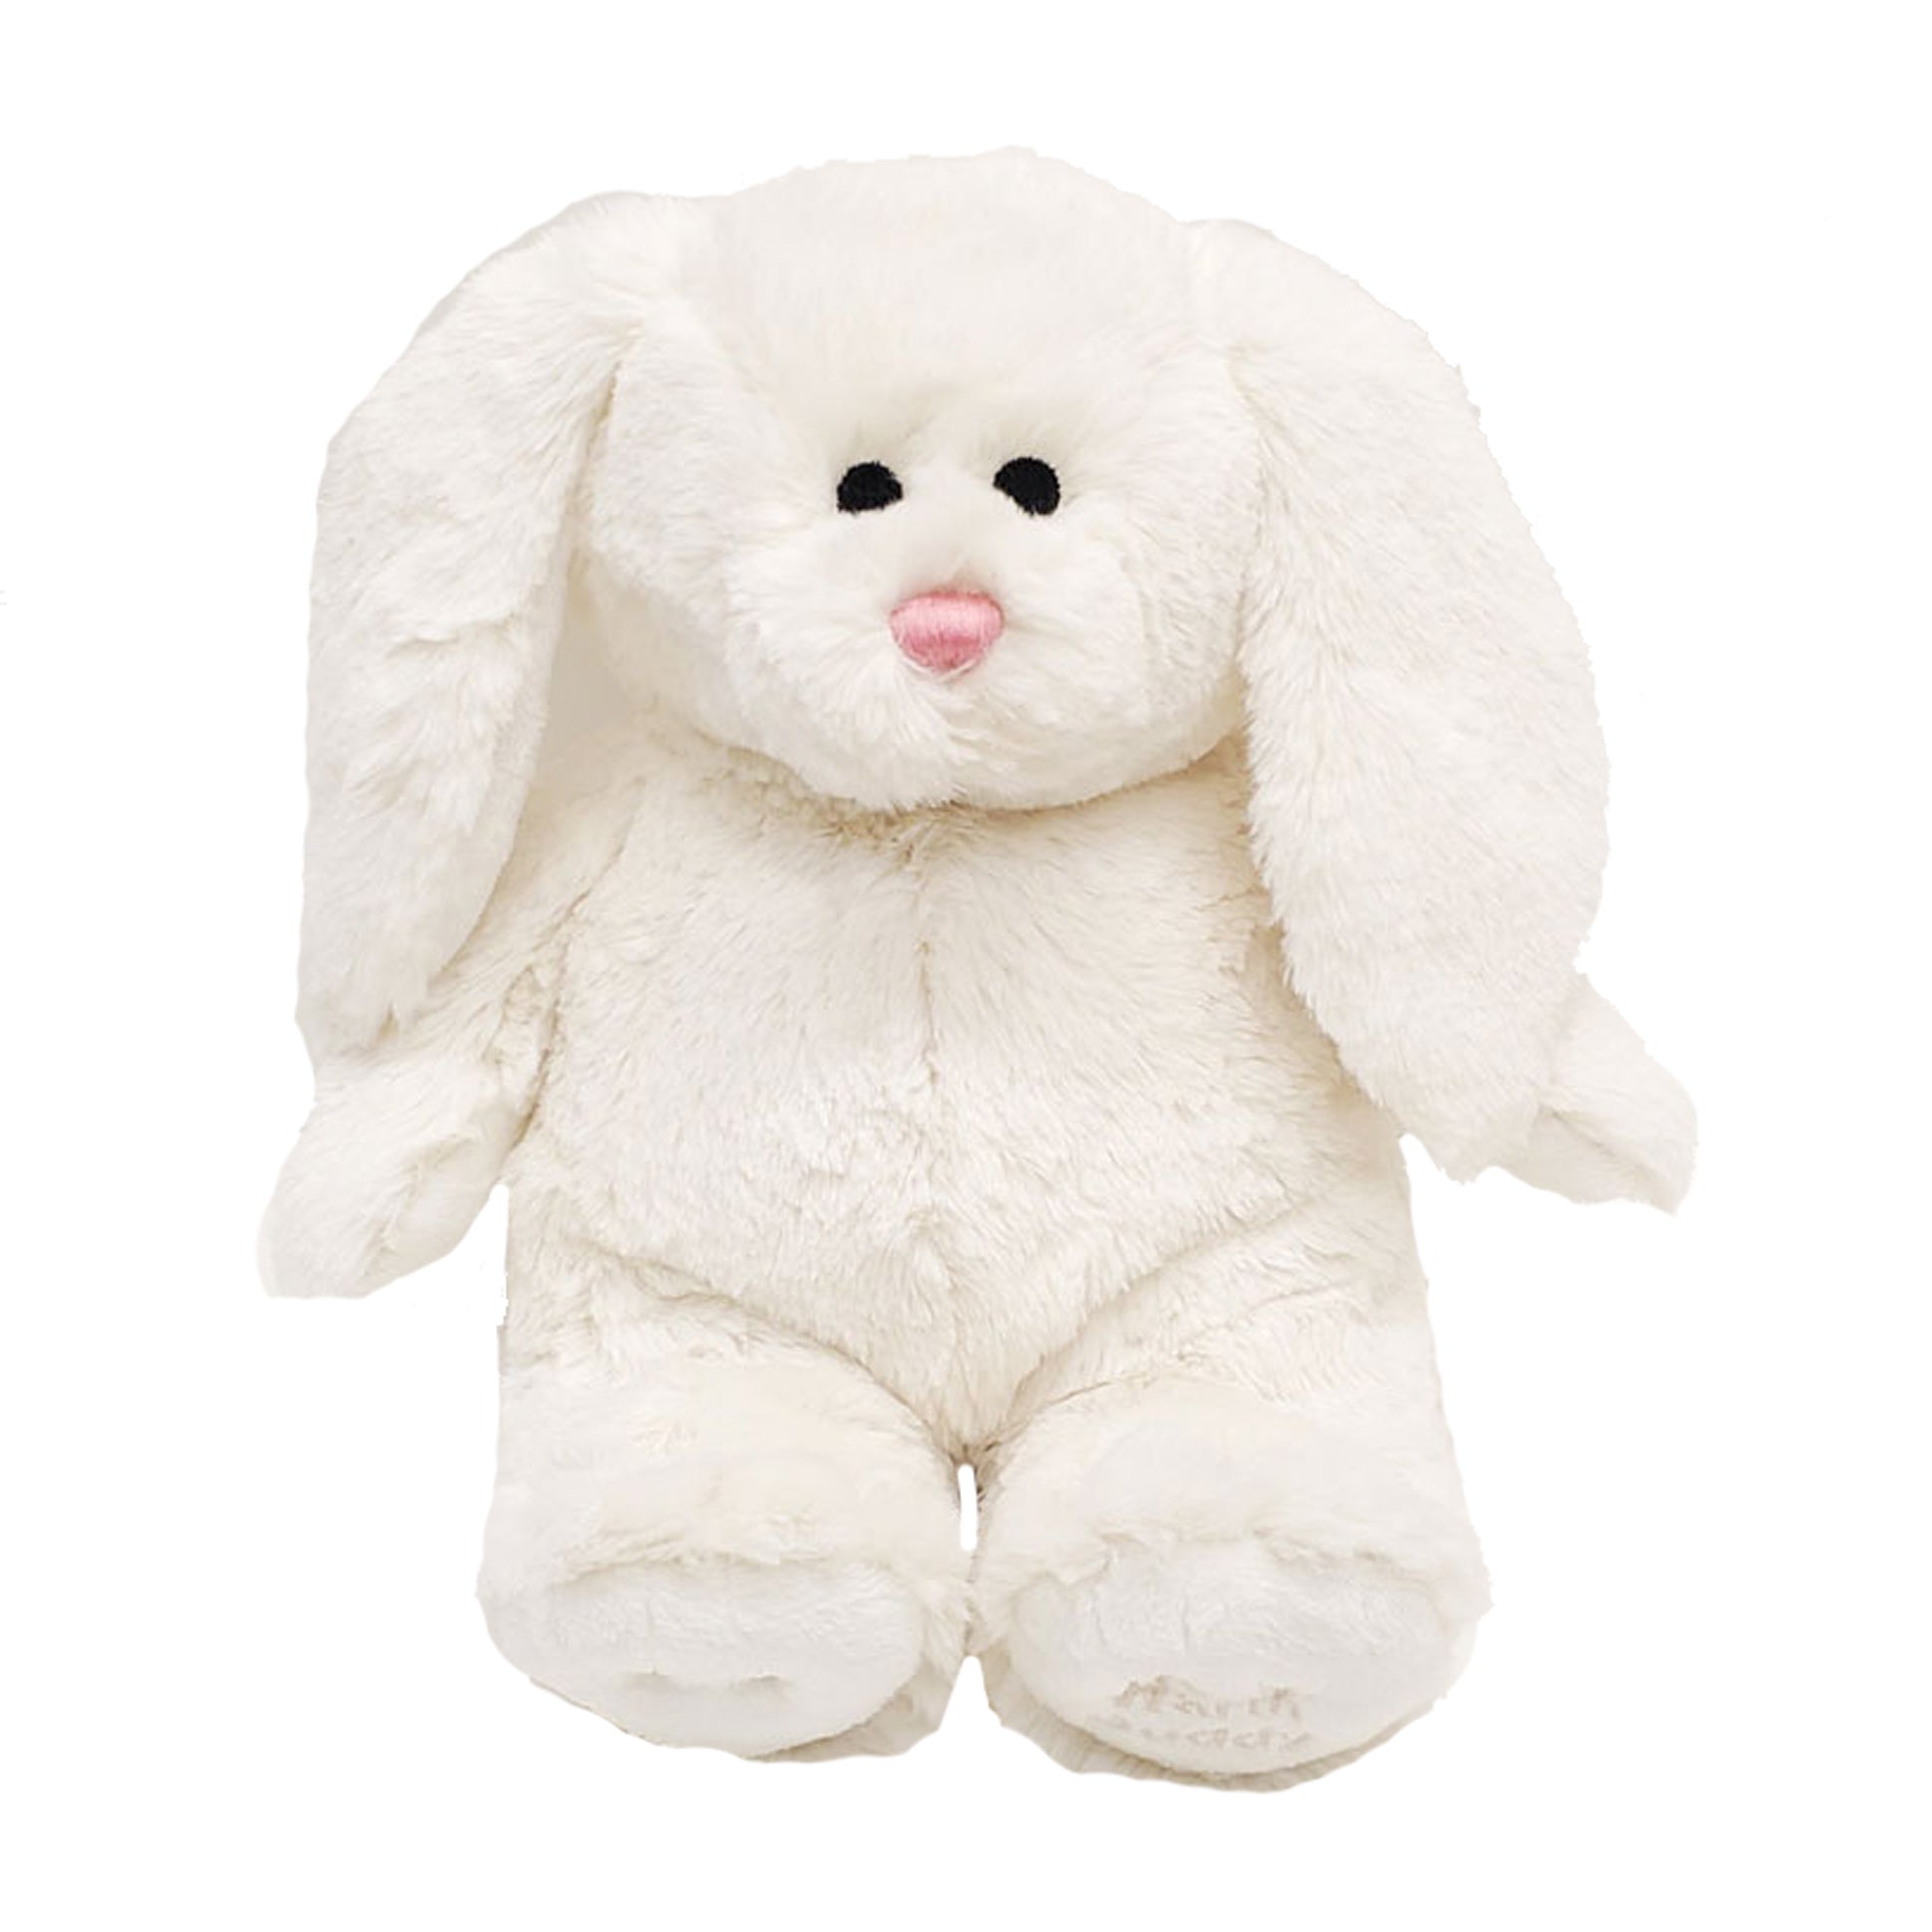 Cuddle Buddy Bunny - White - Heated Stuffed Animal